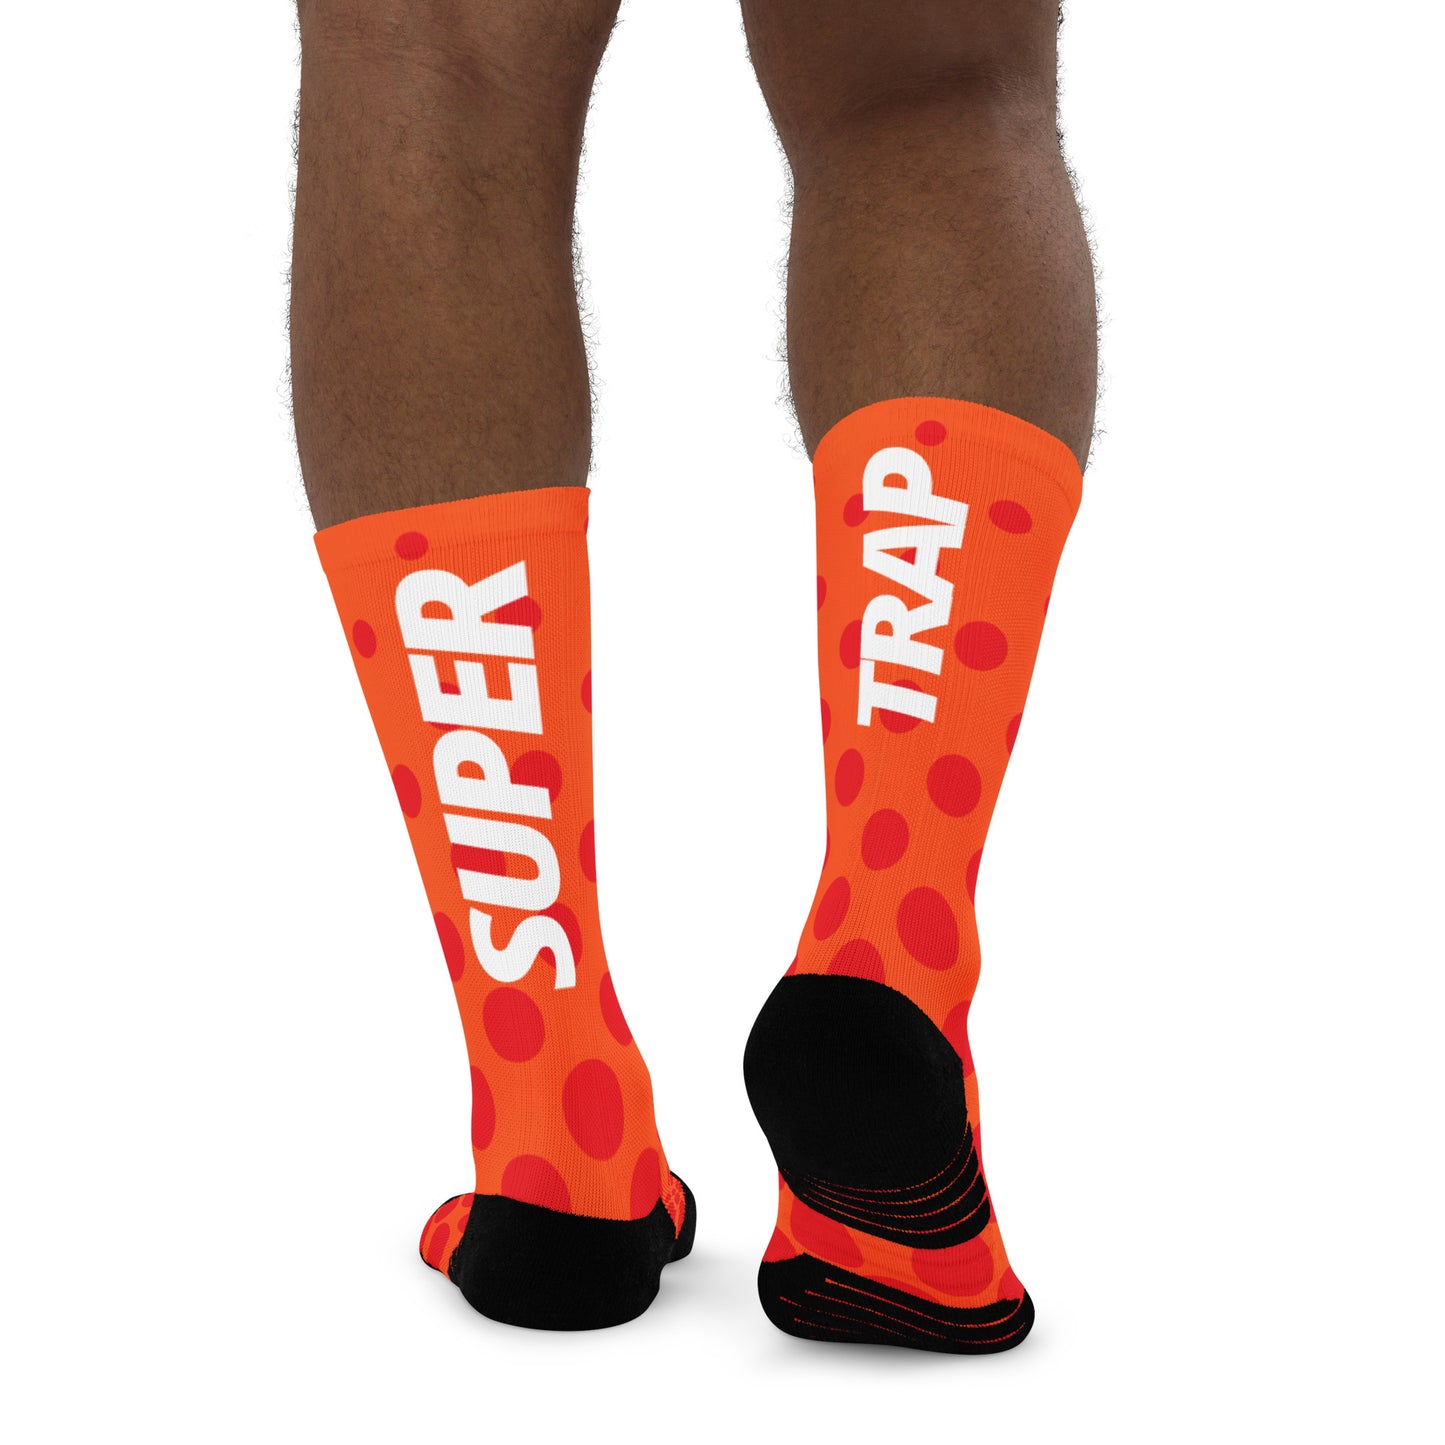 Calcetines deportivos SUPERTRAP - Naranjas